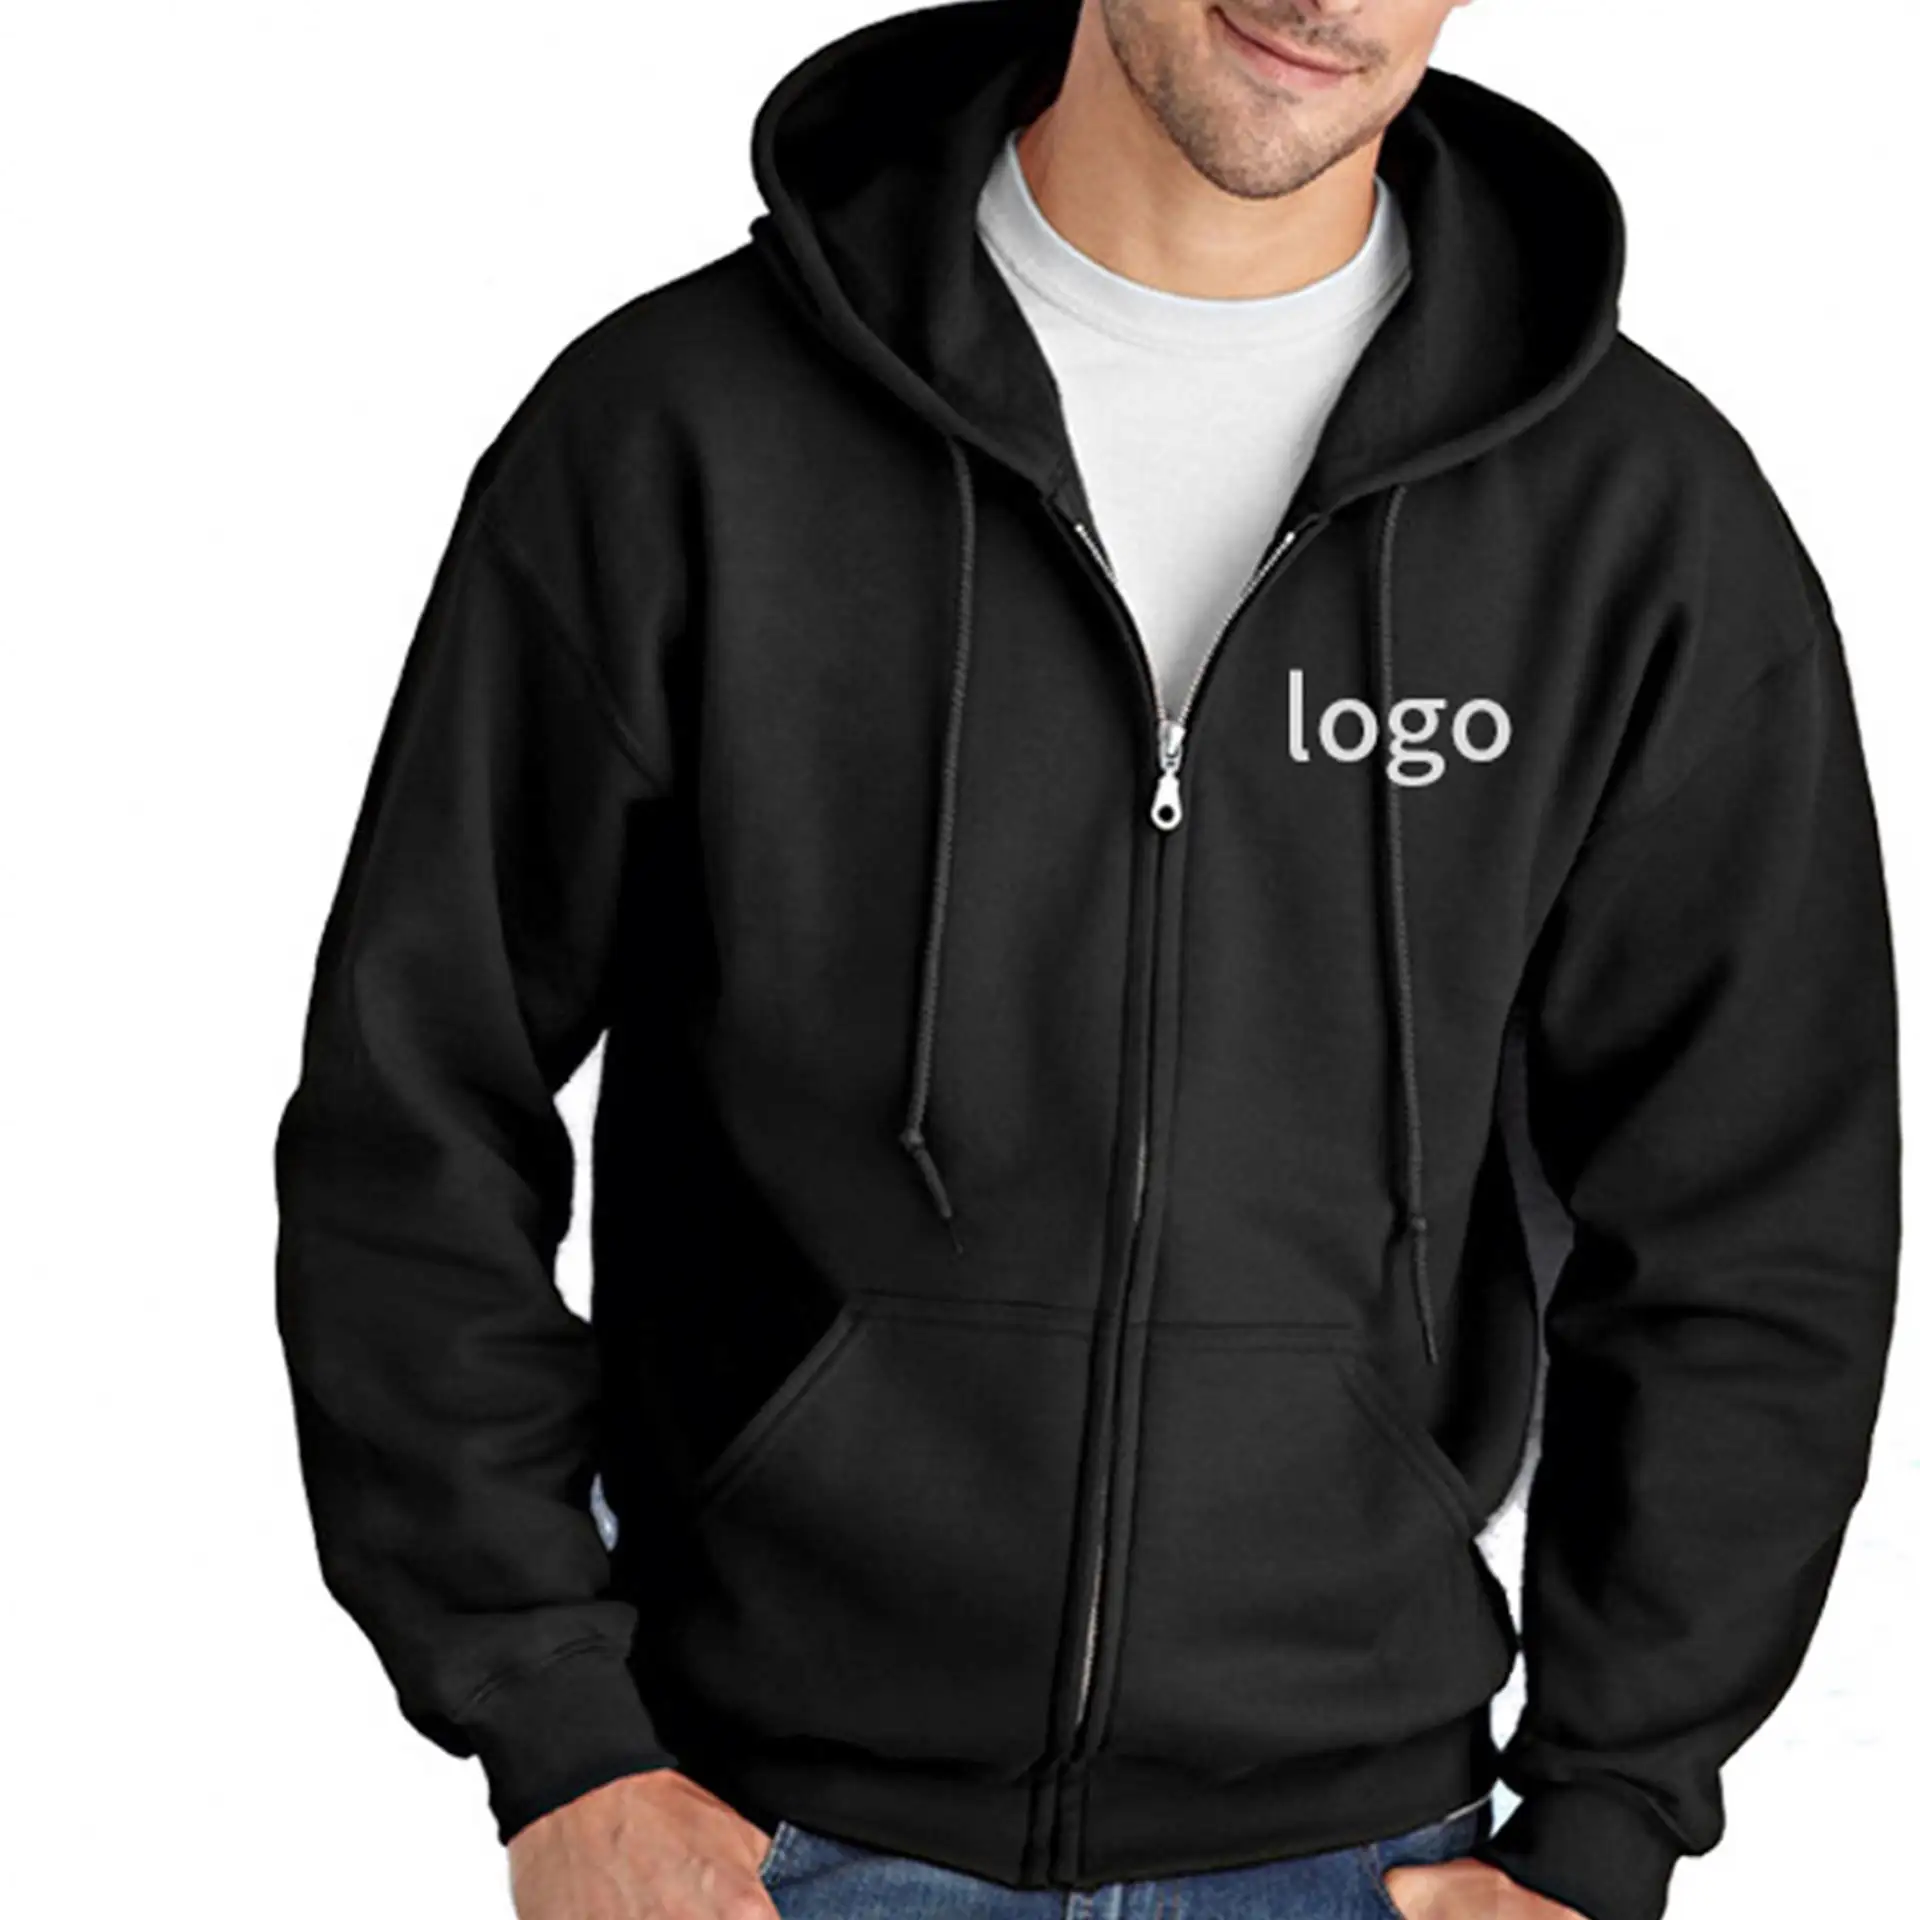 Custom logo embroidery full-zip hodie unisex fleece hood zip up jacket zipped up hoodies sweatshirt